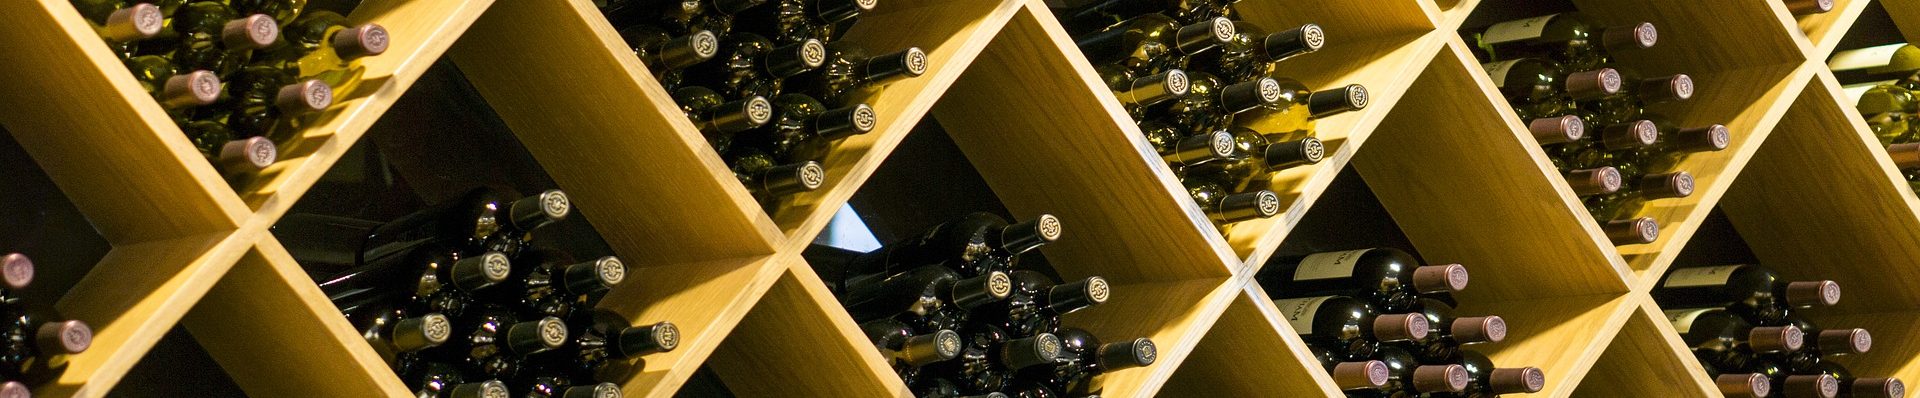 Festnight Wooden Wine Rack for 16 Bottles 55 x 23 x 85 cm Solid Wood Wine Holder